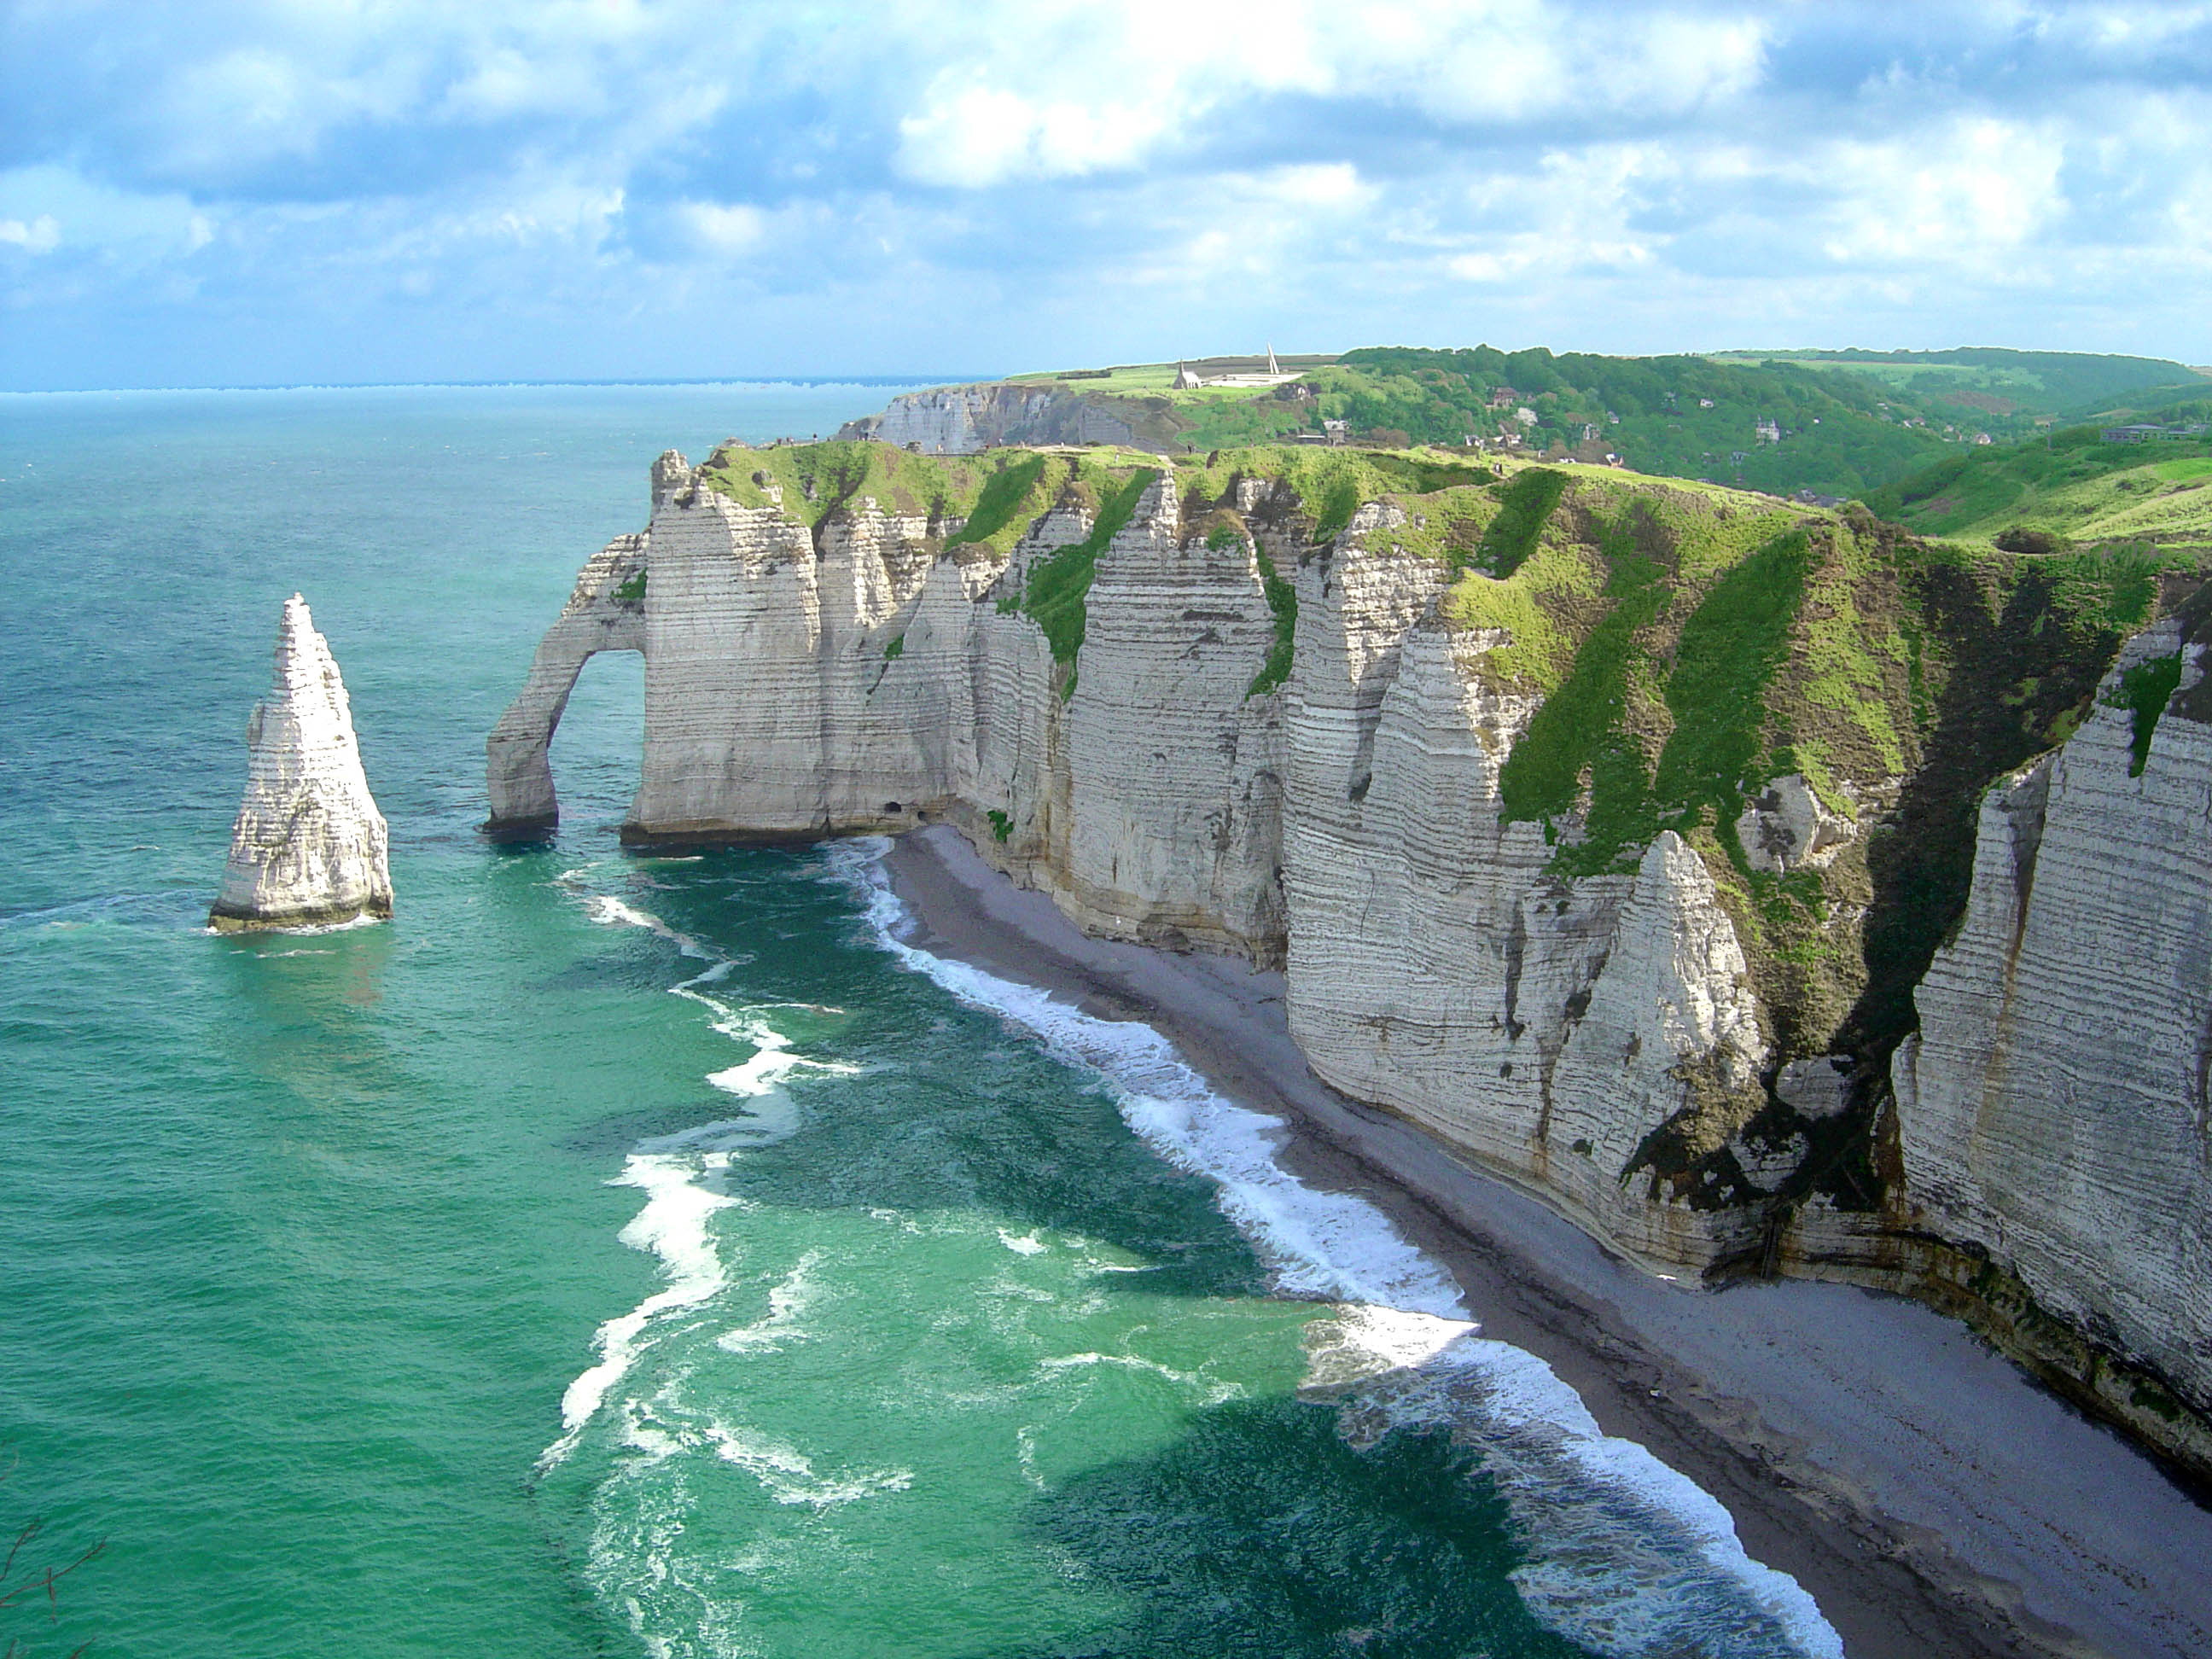 Этрета. Нормандия скалы Этрета. Этрета, Нормандия, Франция. Скалы Этрета во Франции. Меловые скалы Этрета.